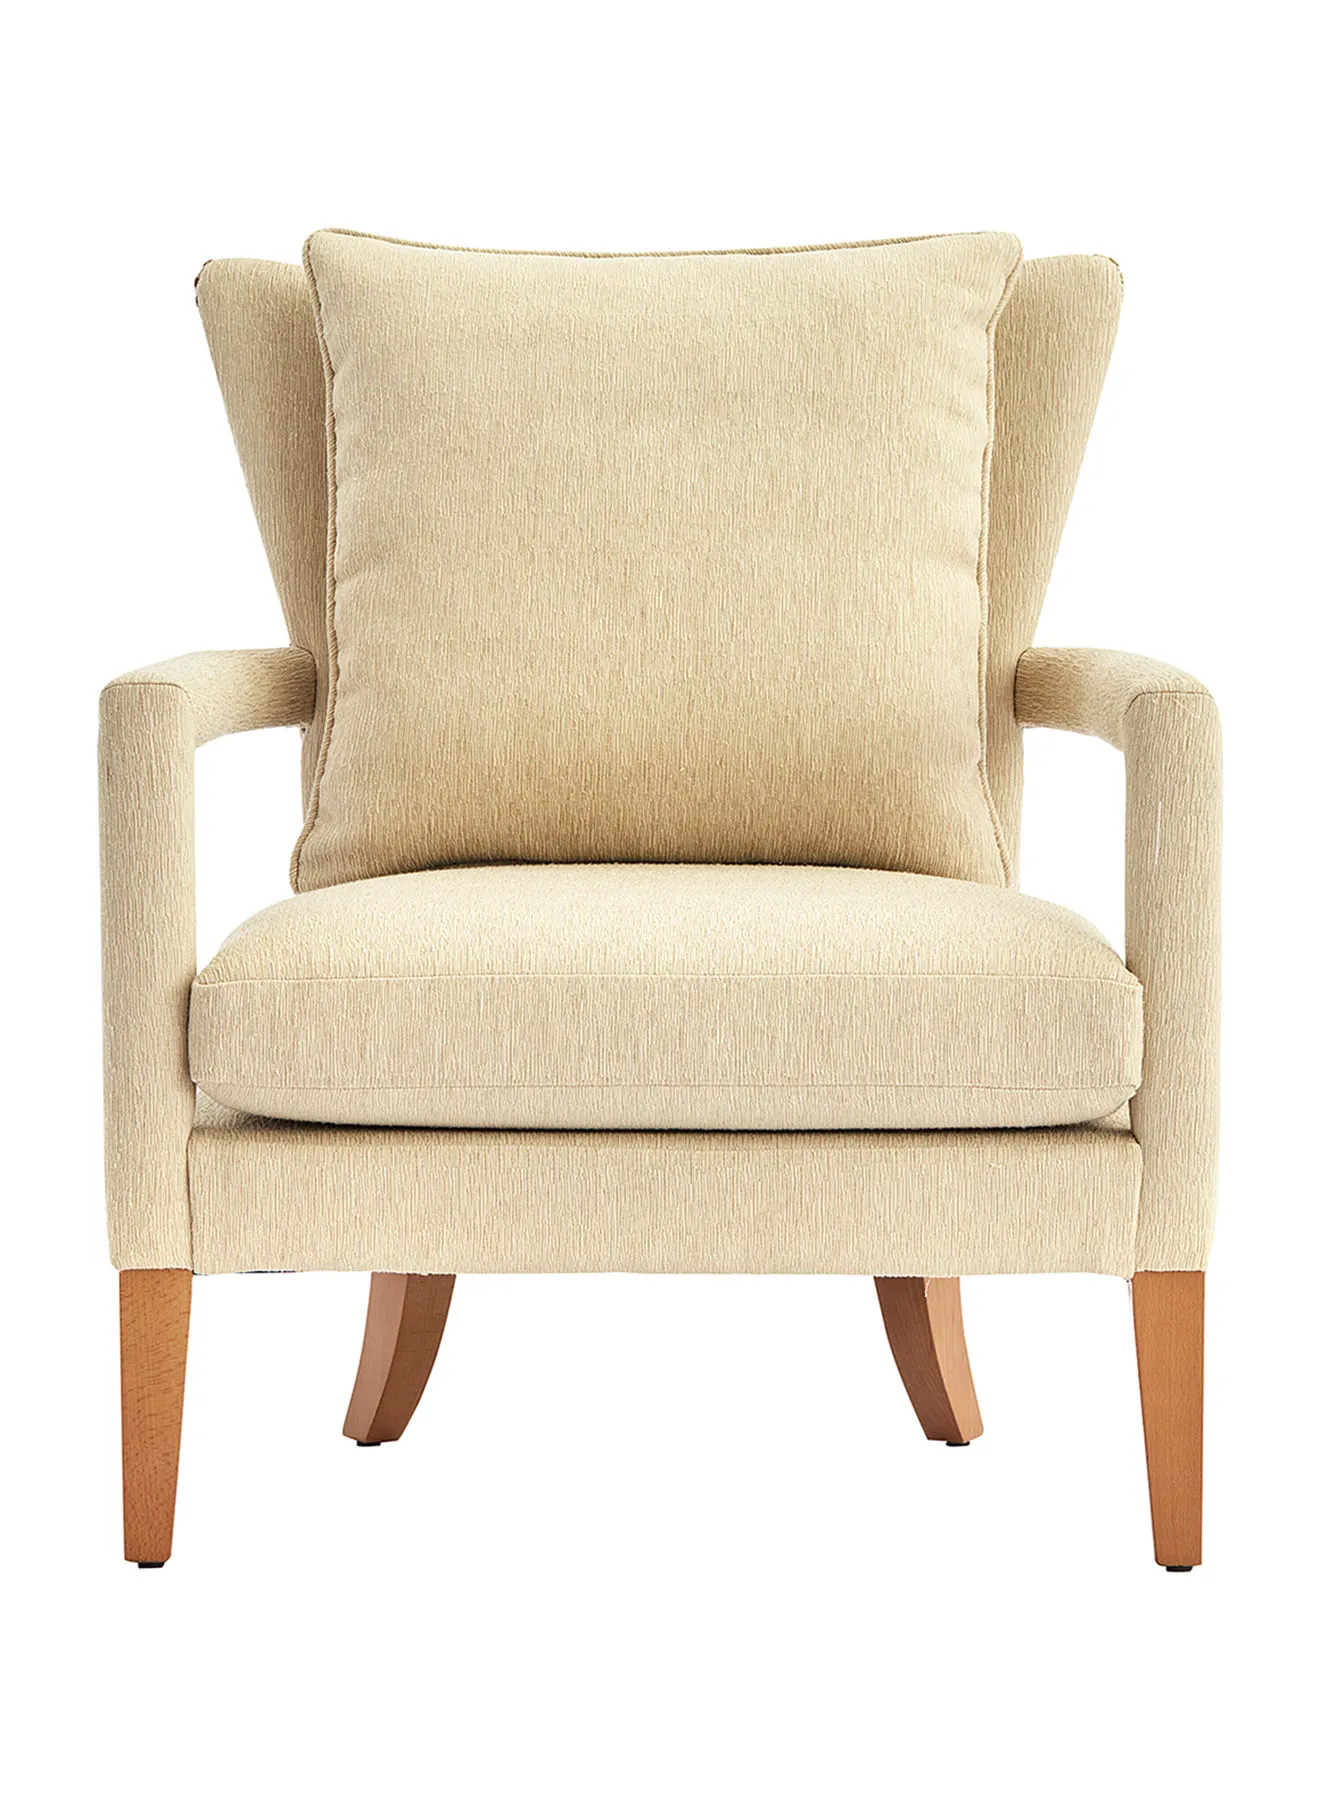 ebb & flow Armchair Luxurious - In Beige Wooden Chair Size 710 X 760 X 855